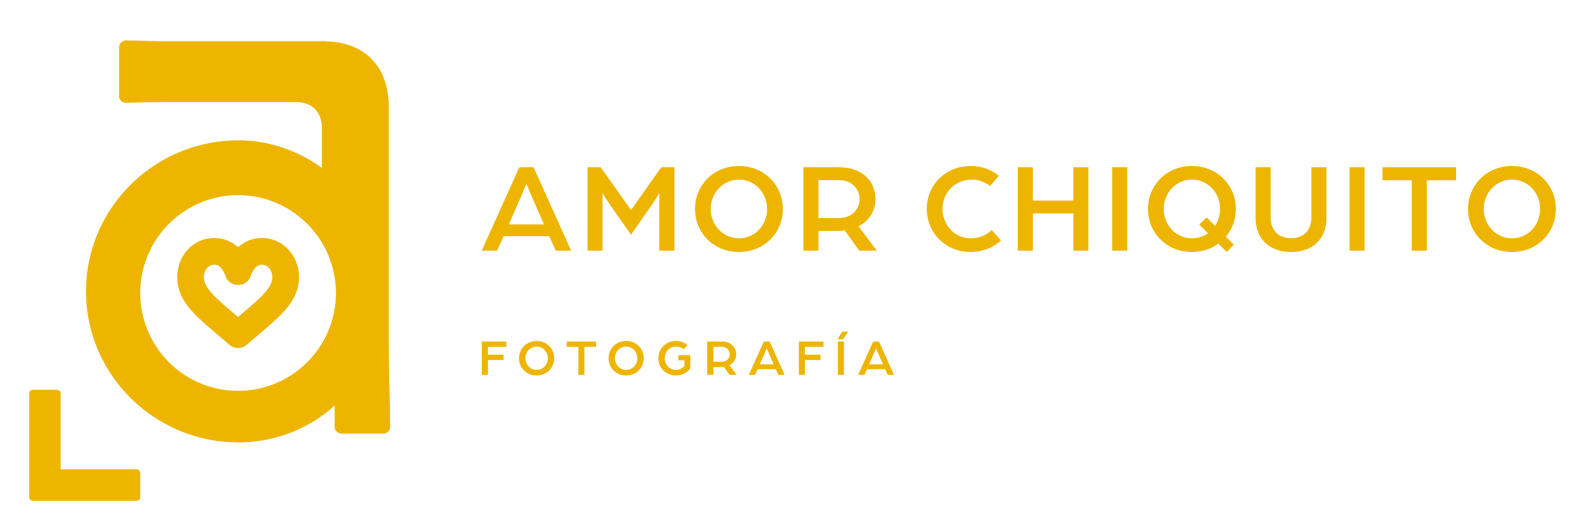 Amor Chiquito Fotografia